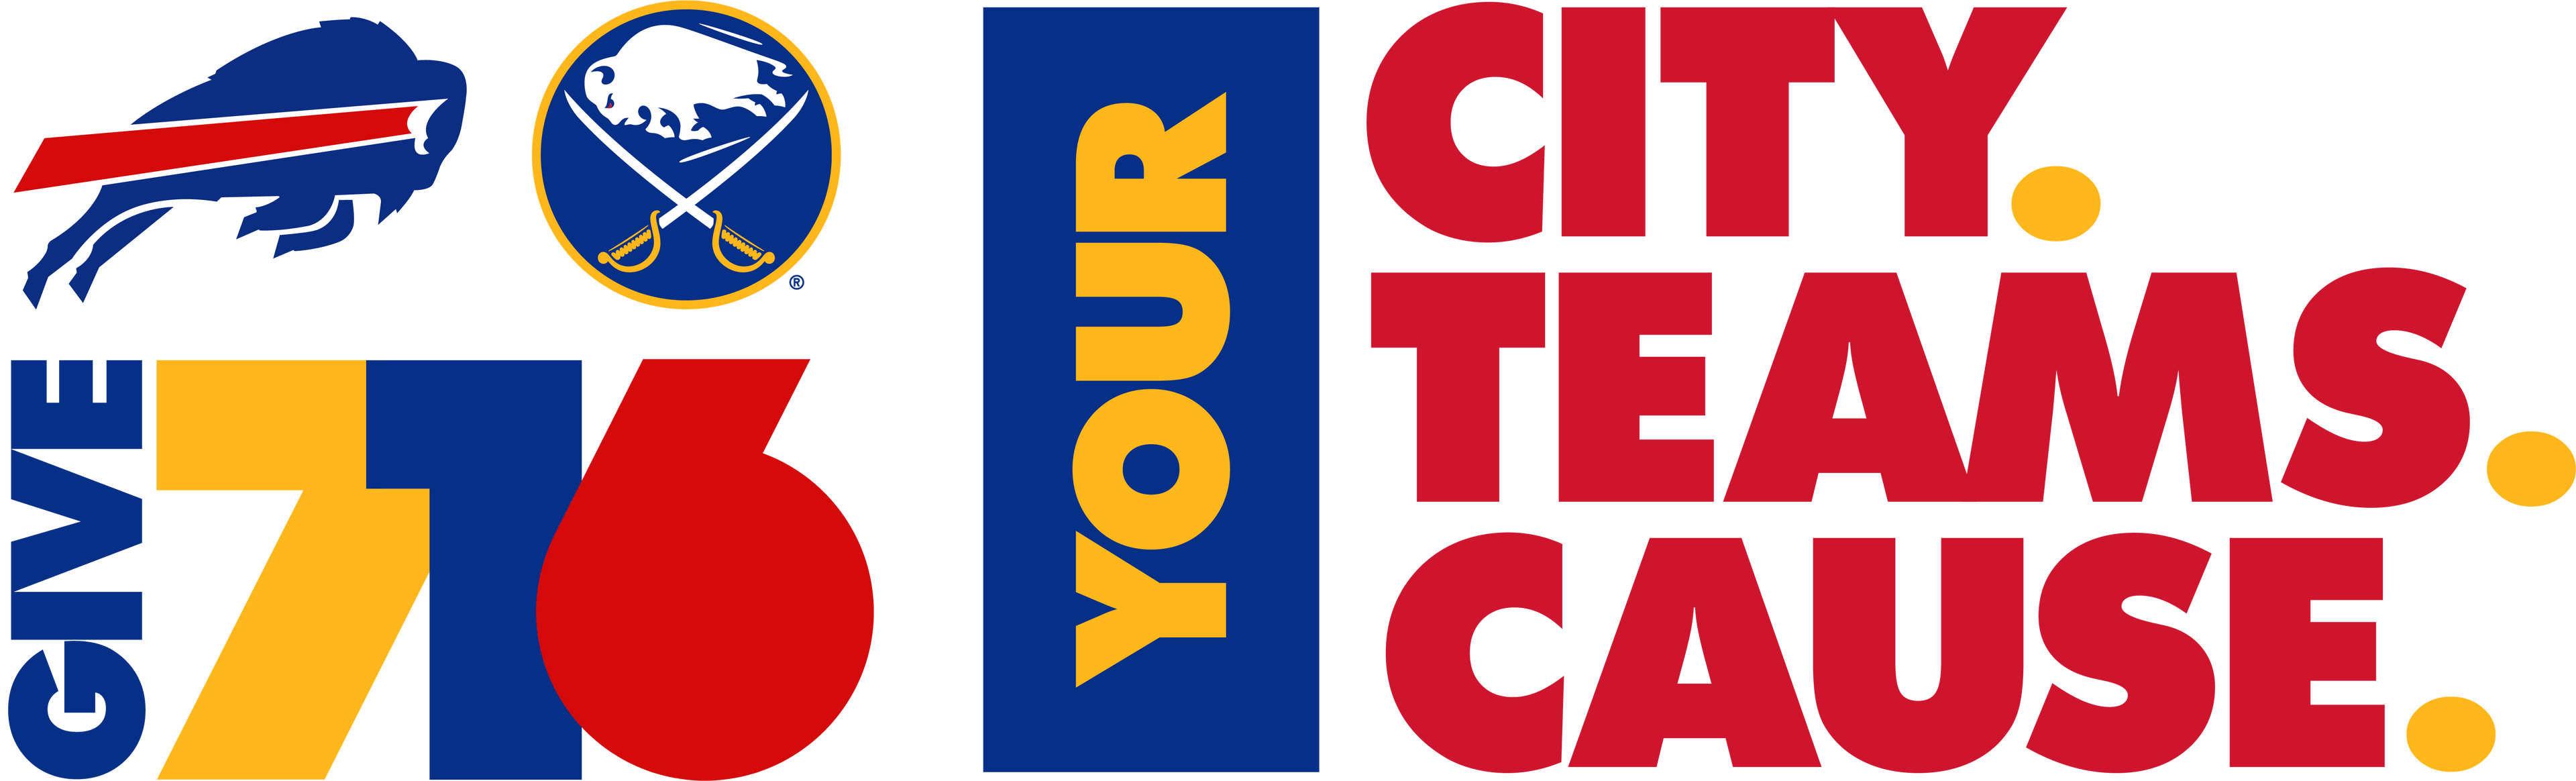 Buffalo Giving Day 2021 logo image